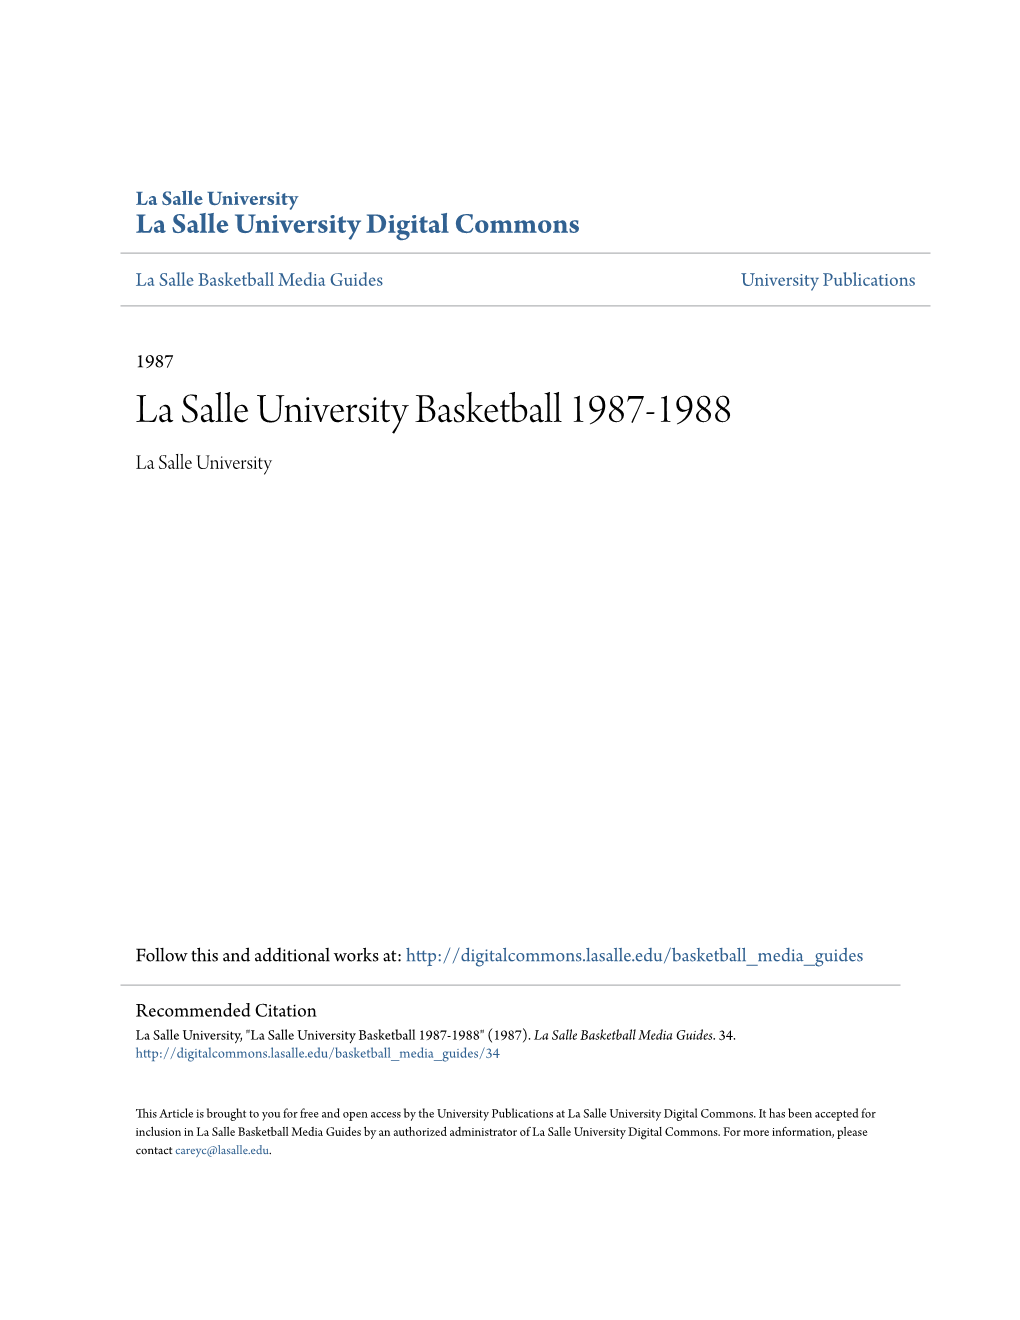 La Salle University Basketball 1987-1988 La Salle University